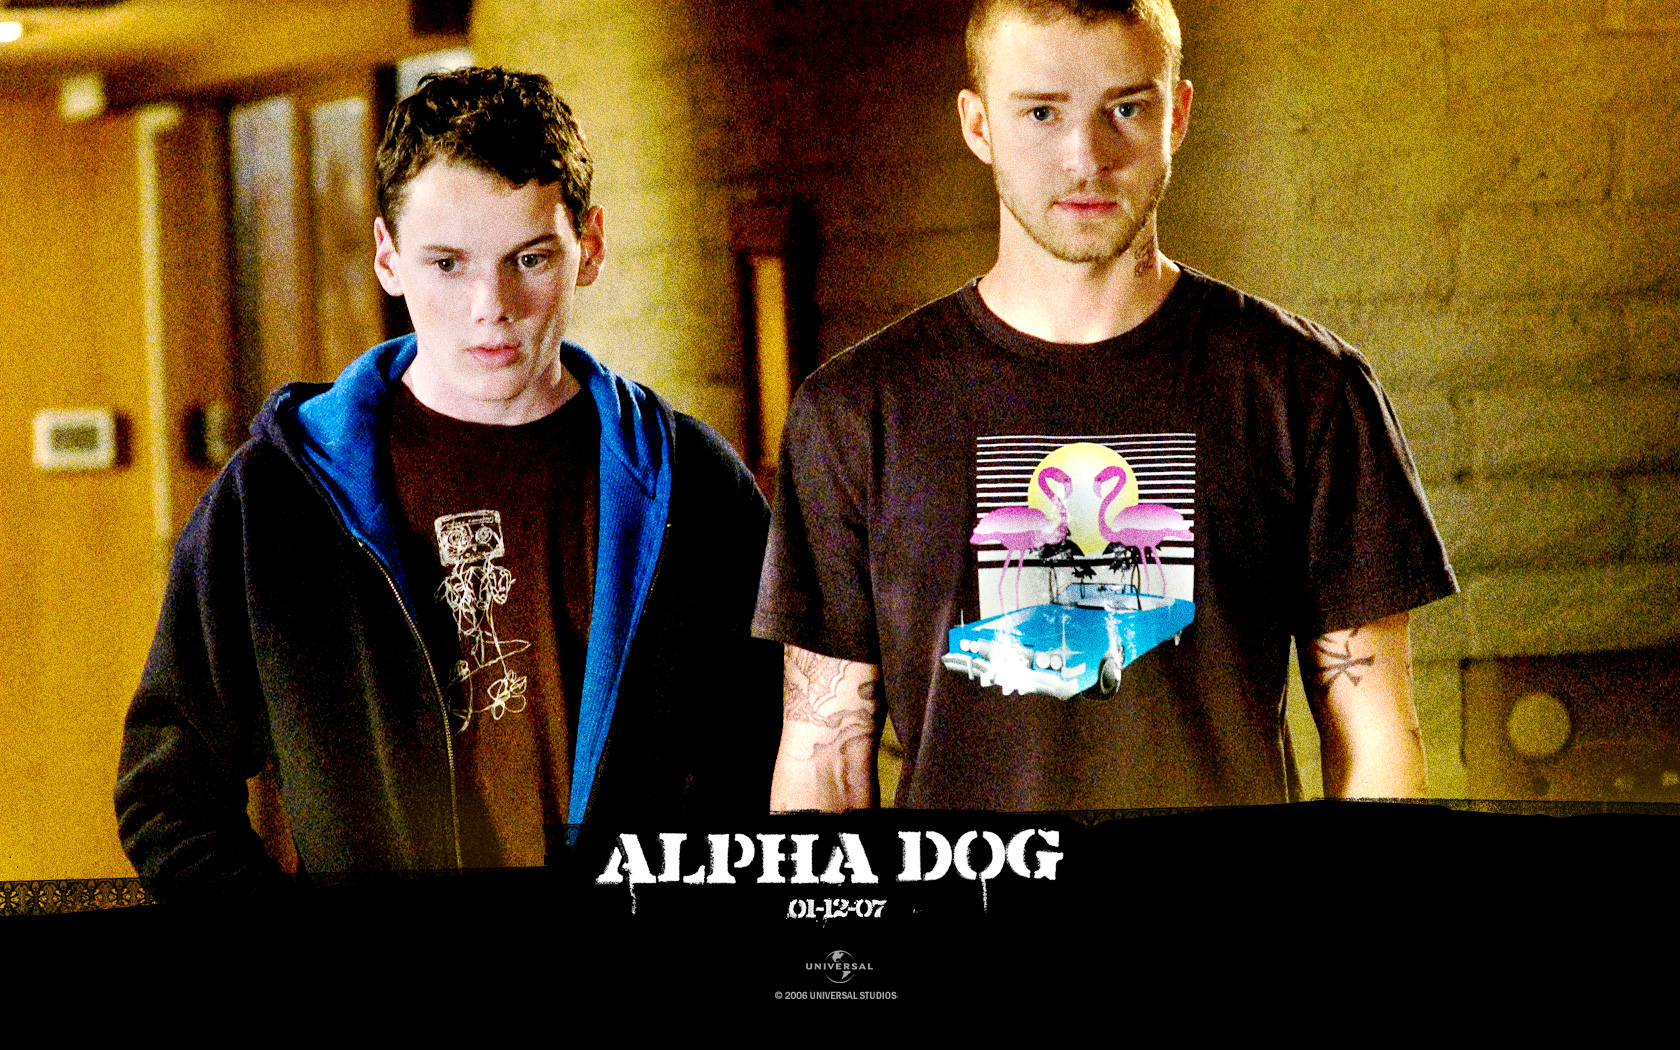 alpha dog movie free download